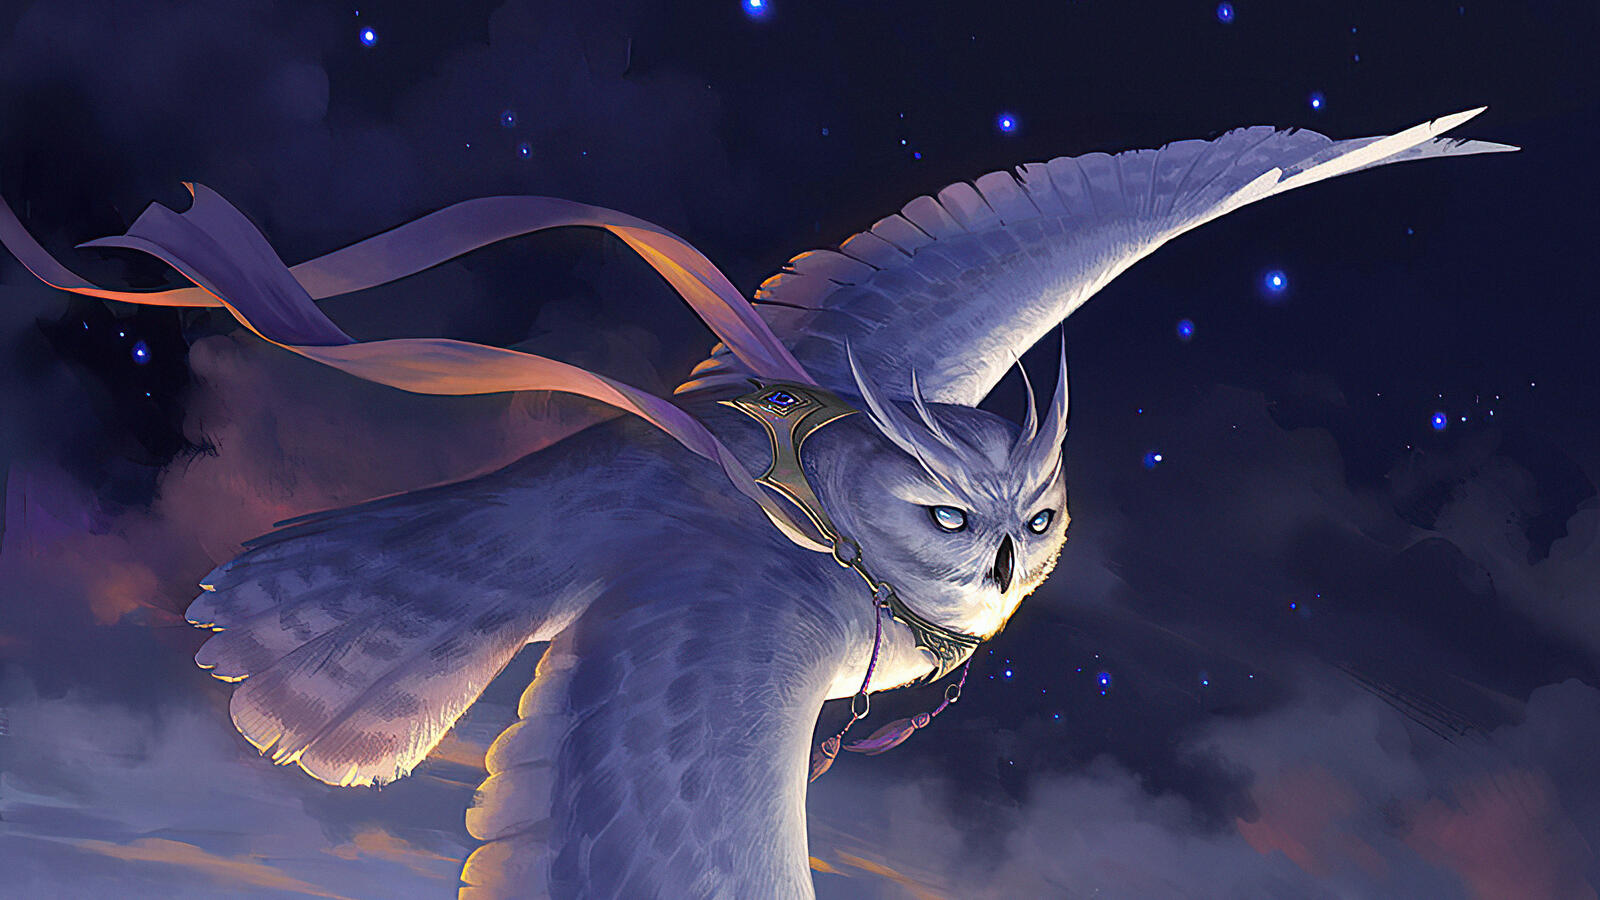 Wallpapers artwork an anime owl on the desktop